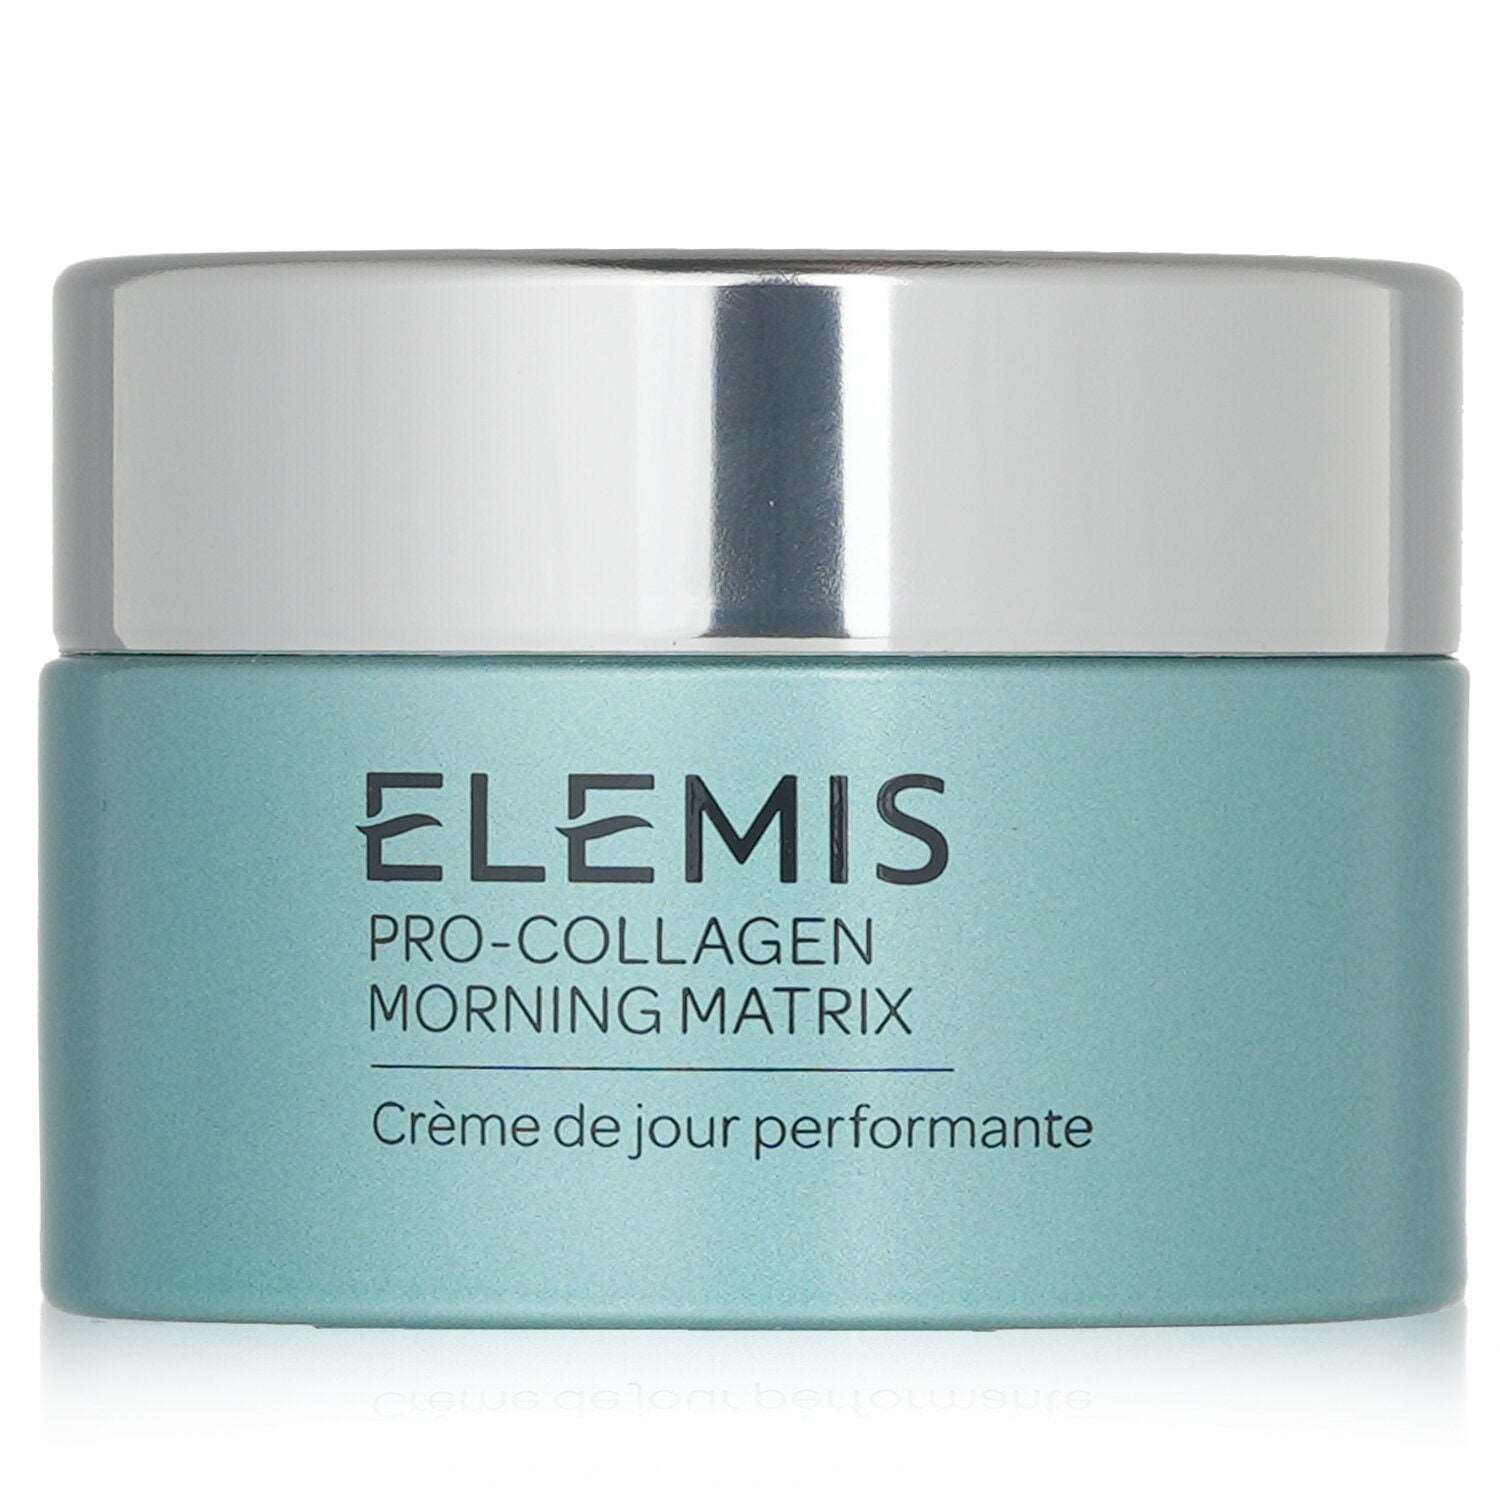 ELEMIS - Pro Collagen Morning Matrix - 50ml/1.6oz 3P's Inclusive Beauty